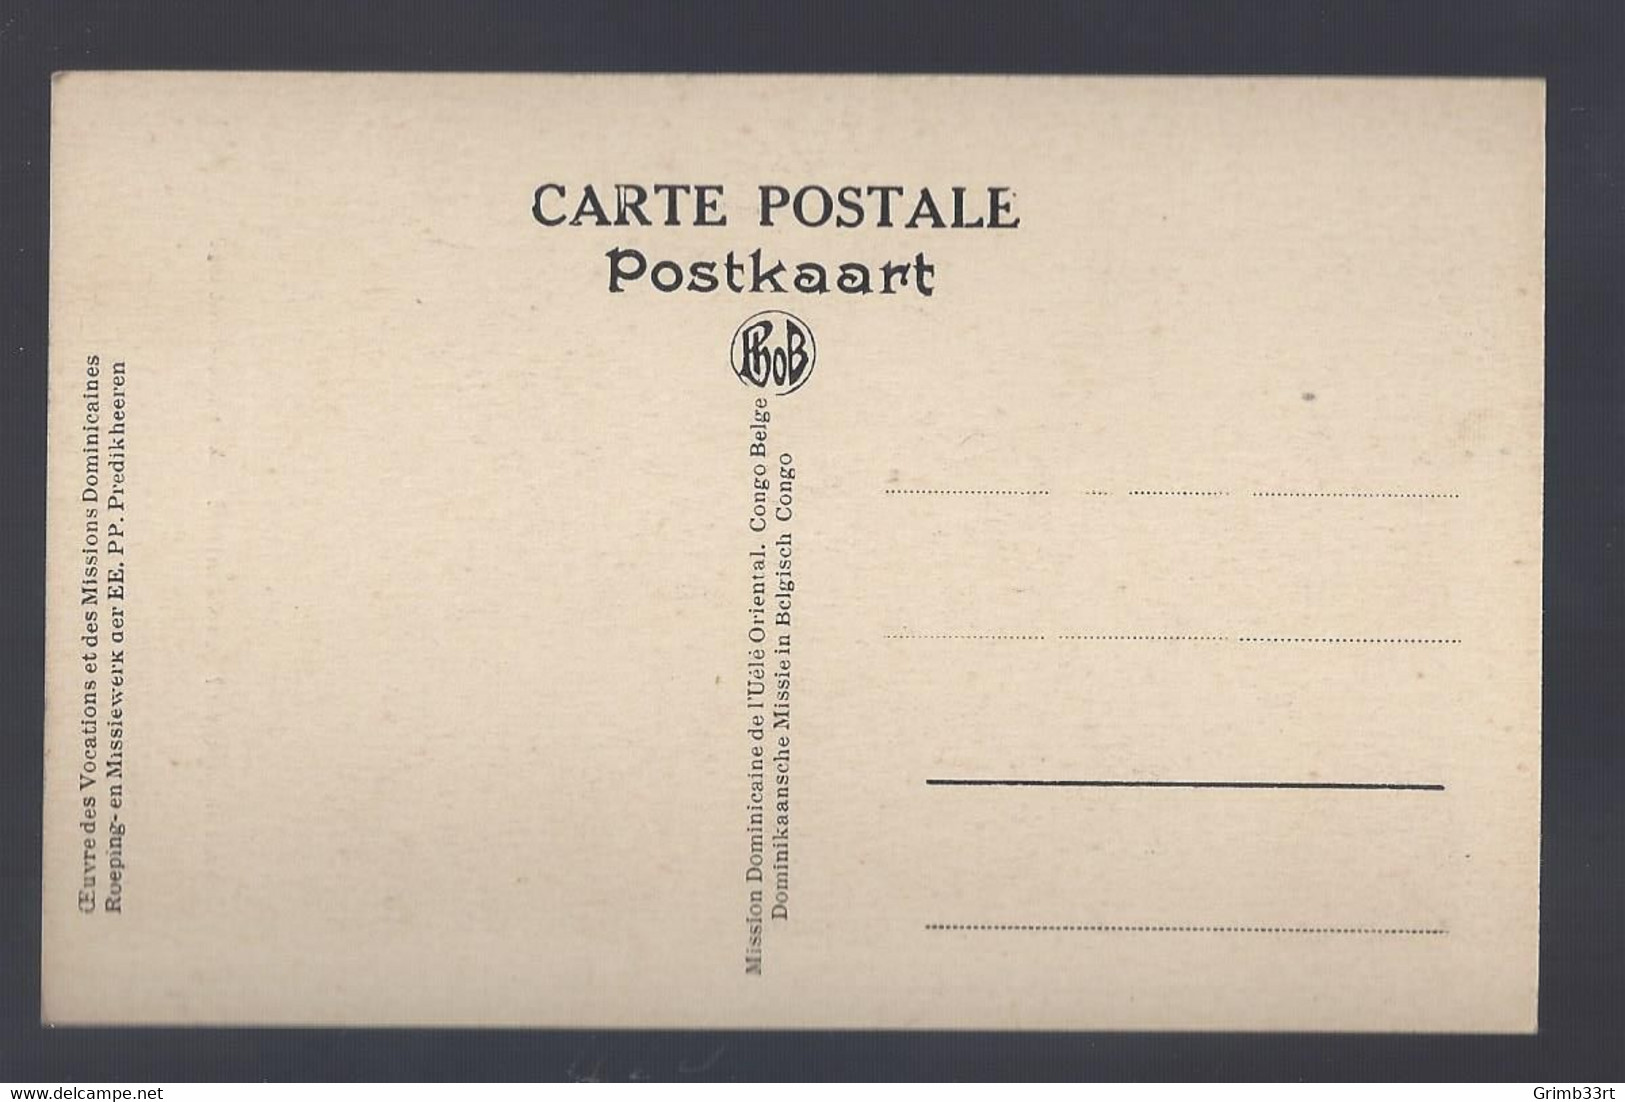 Congo Belge - Amadi - Sphynx? Que Pense-t-il? - Postkaart - Belgian Congo